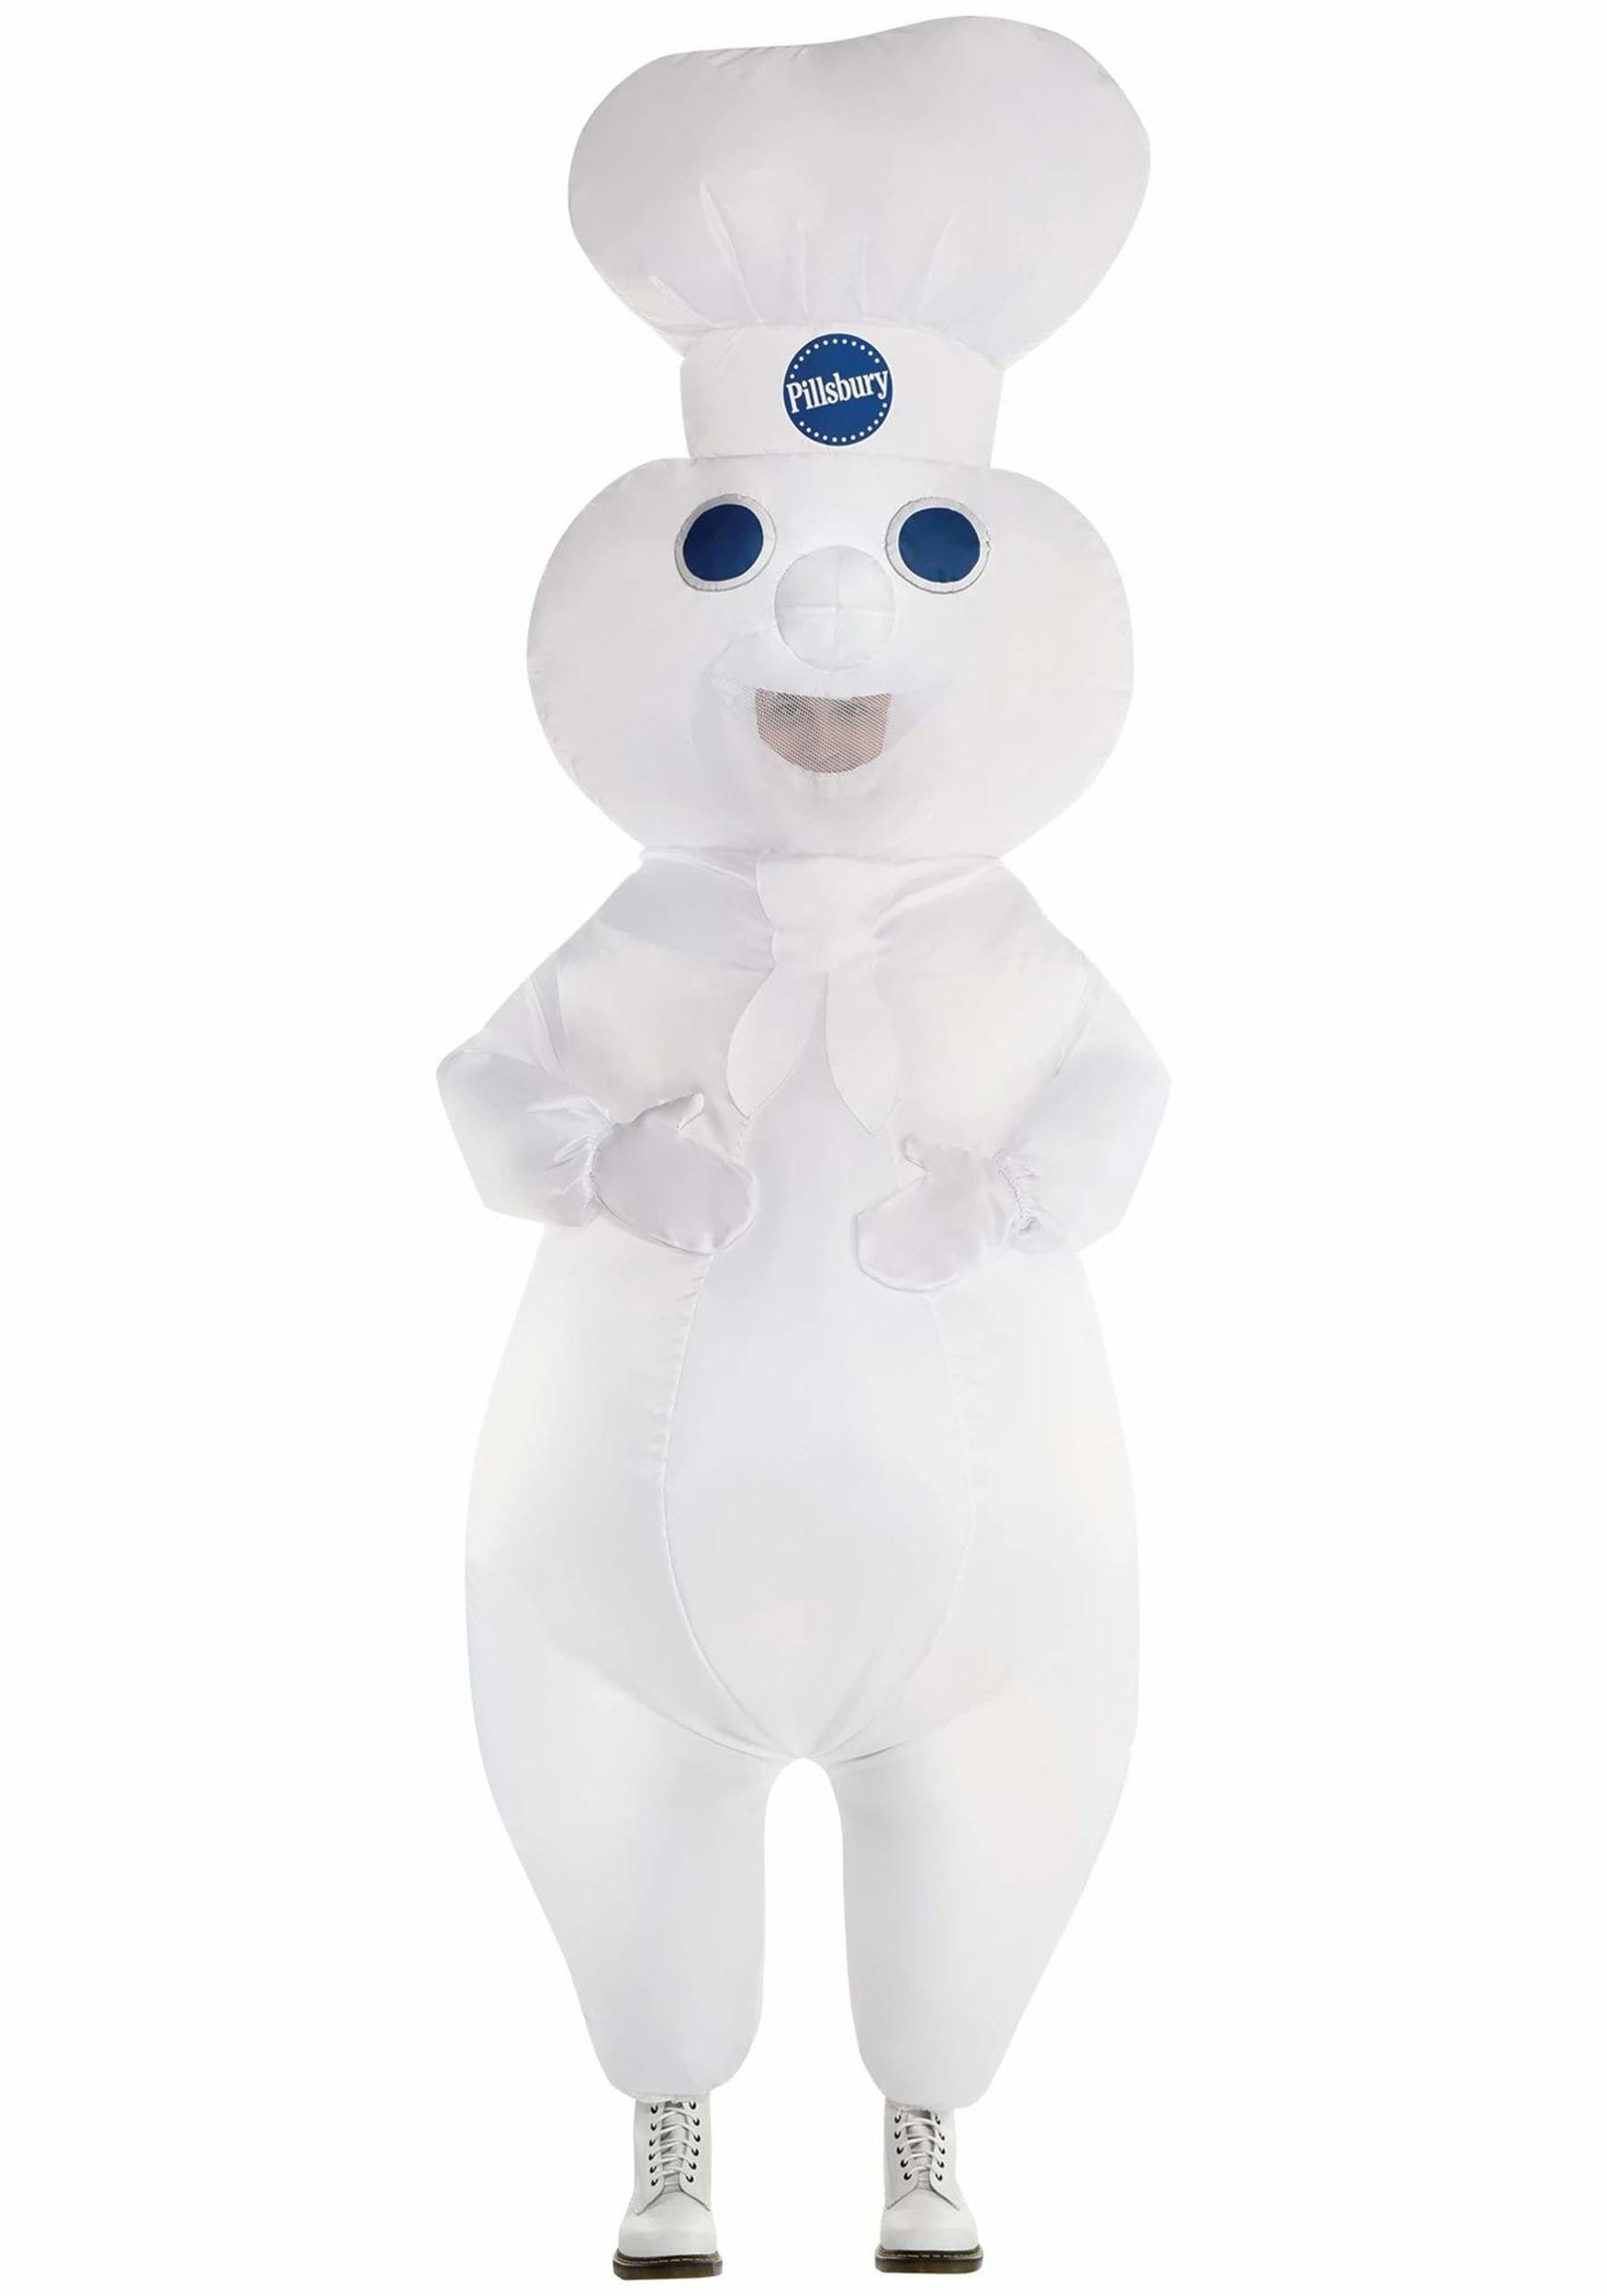 Image of Pillsbury Doughboy Adult Inflatable Costume ID AM8406164-ST